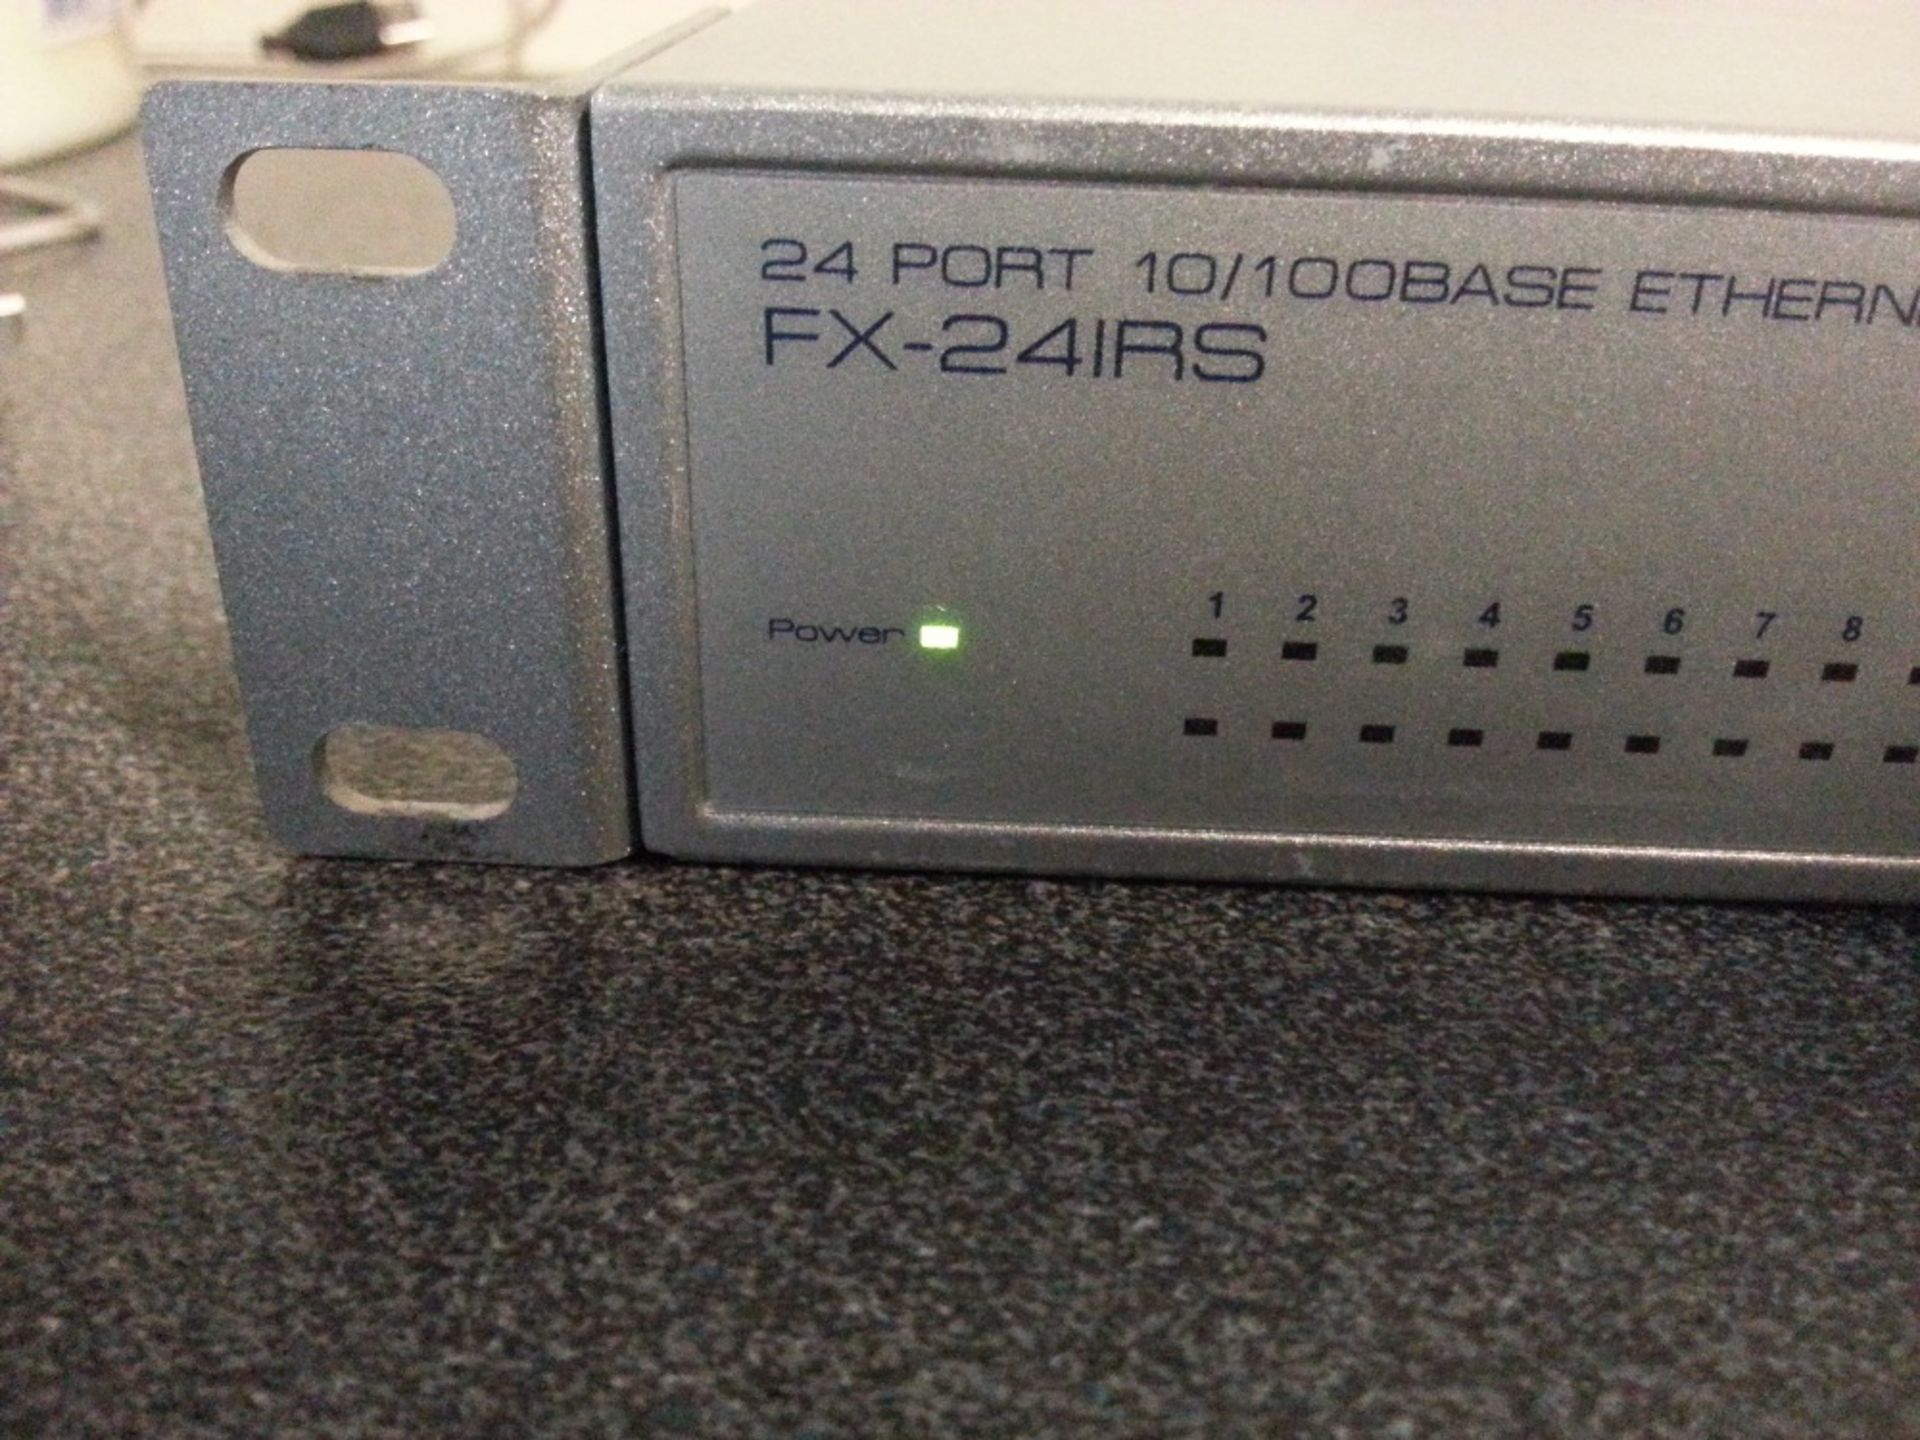 PCI FX-24IRS 24 Port 10/100 Network Switch - 1U Rackmount - Powers On - Image 2 of 3